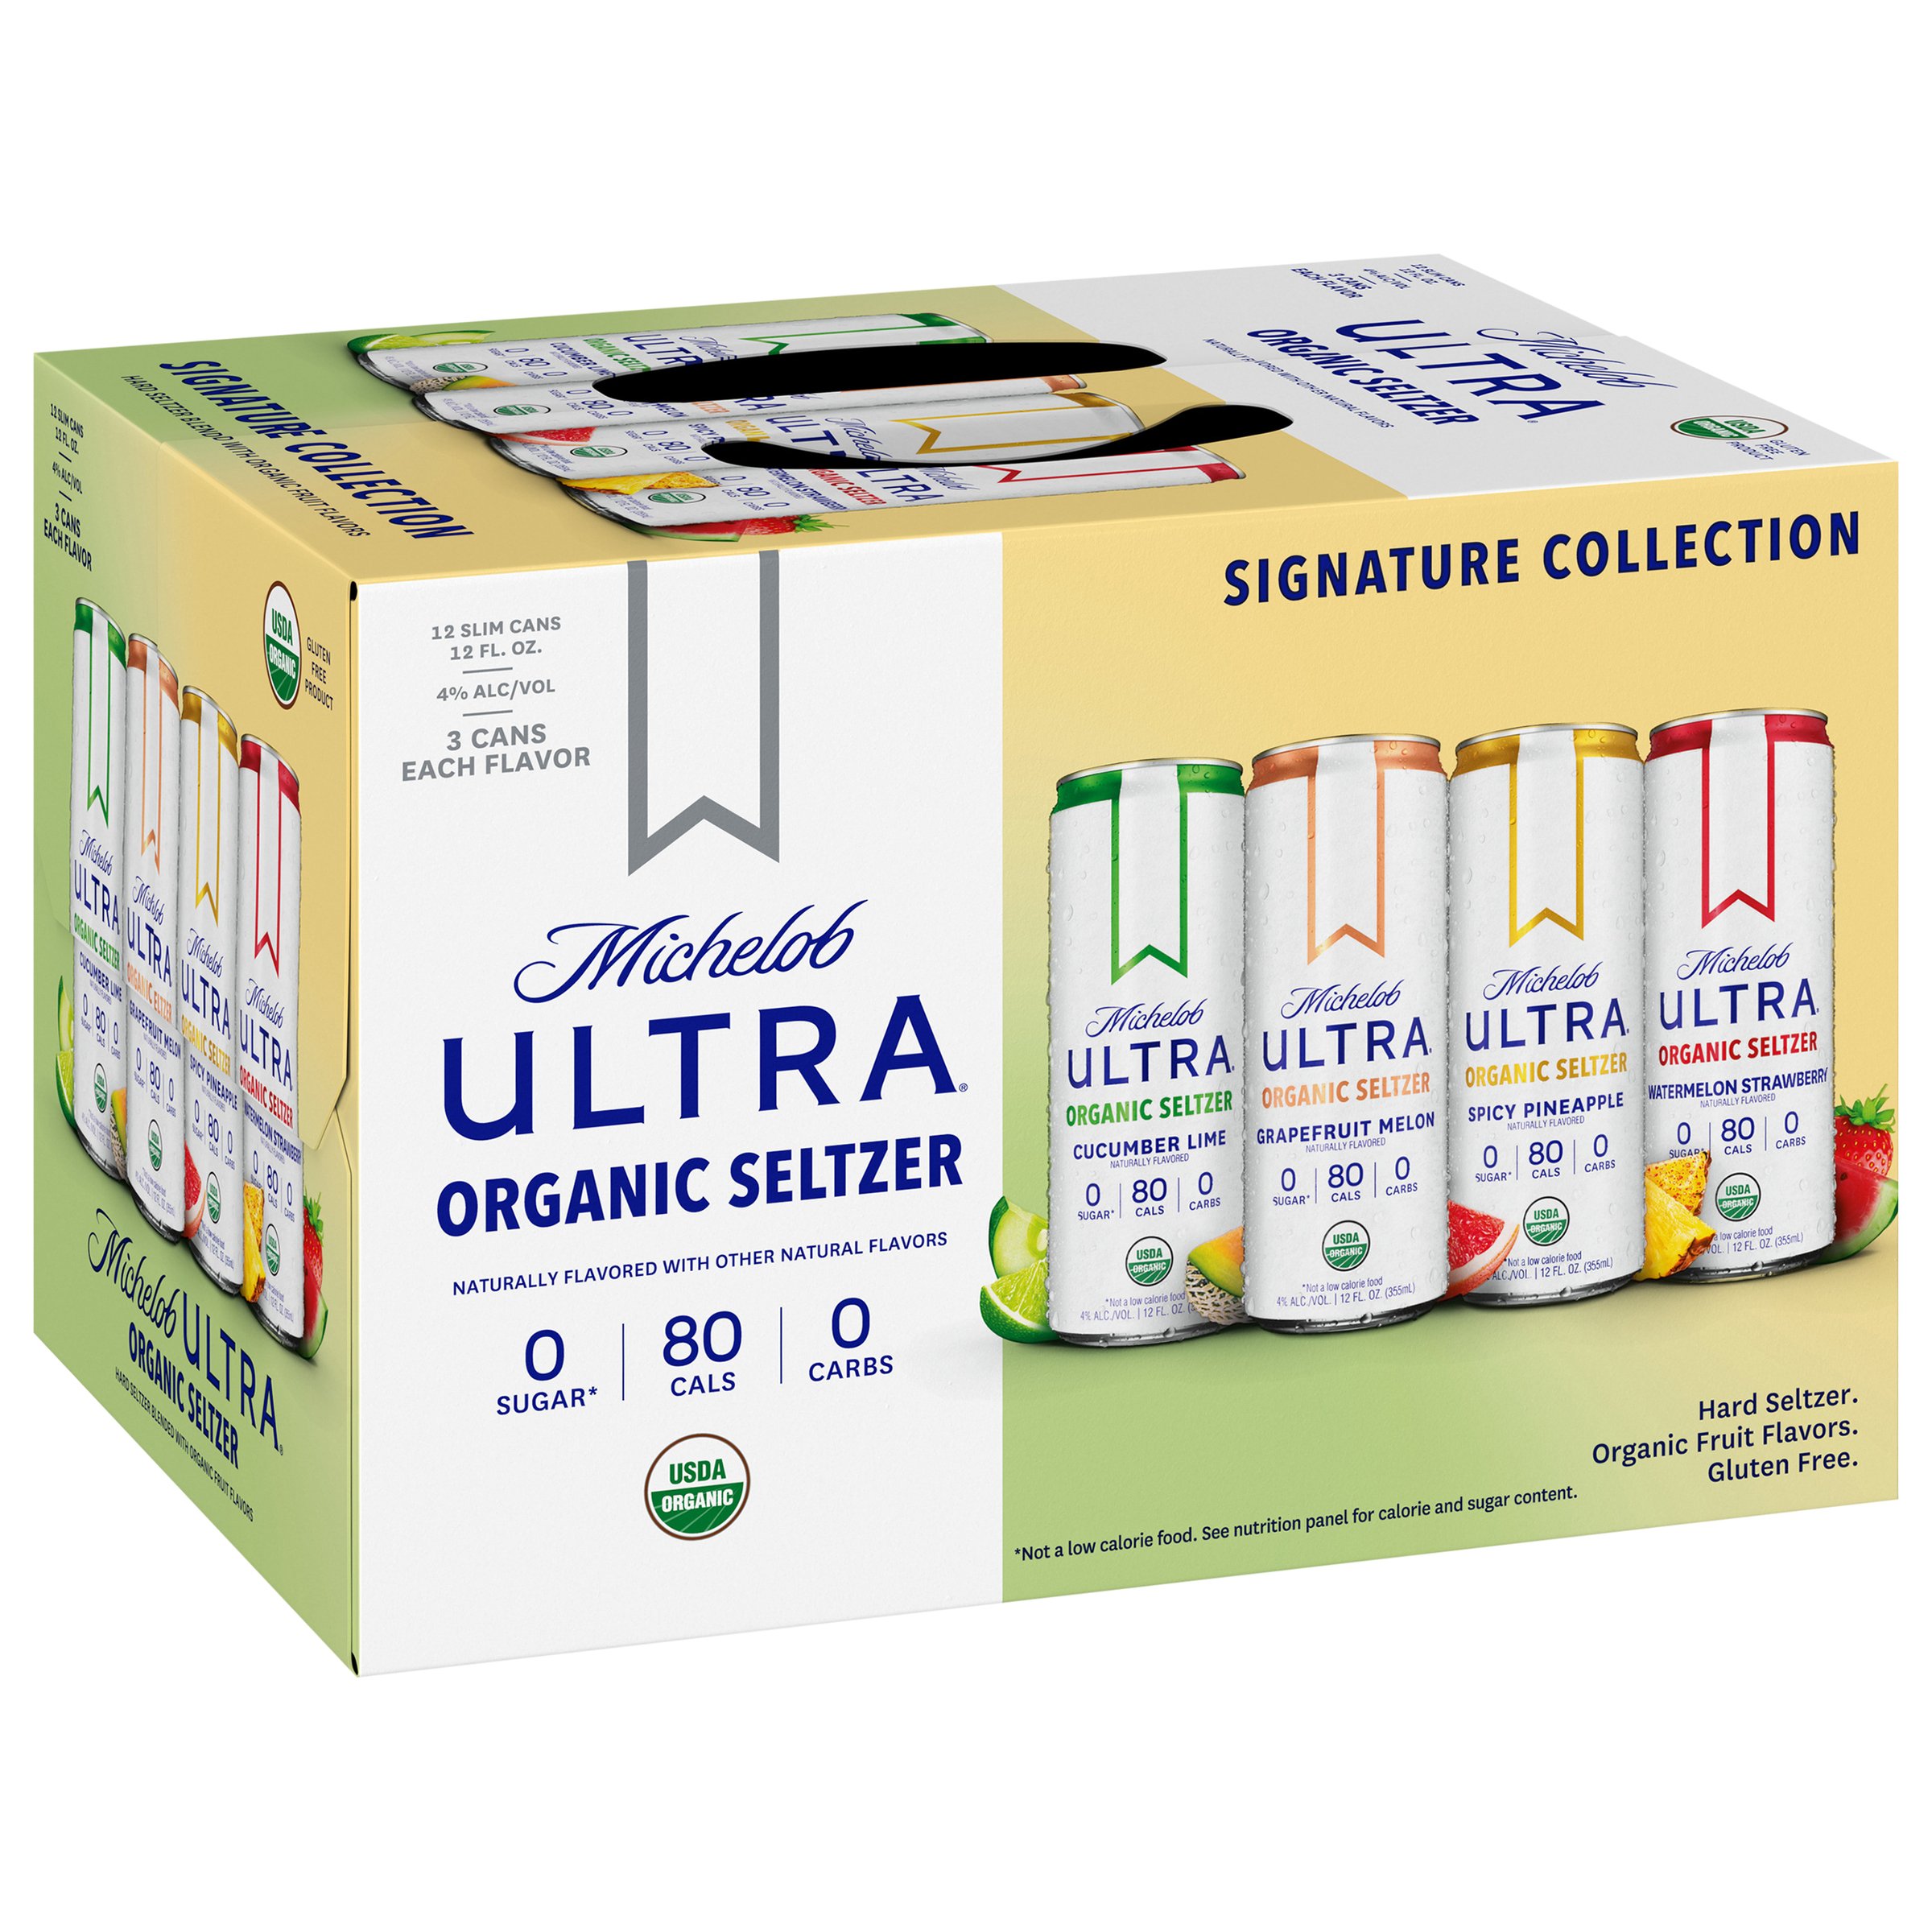 michelob-ultra-seltzer-variety-pack-12-oz-cans-shop-malt-beverages